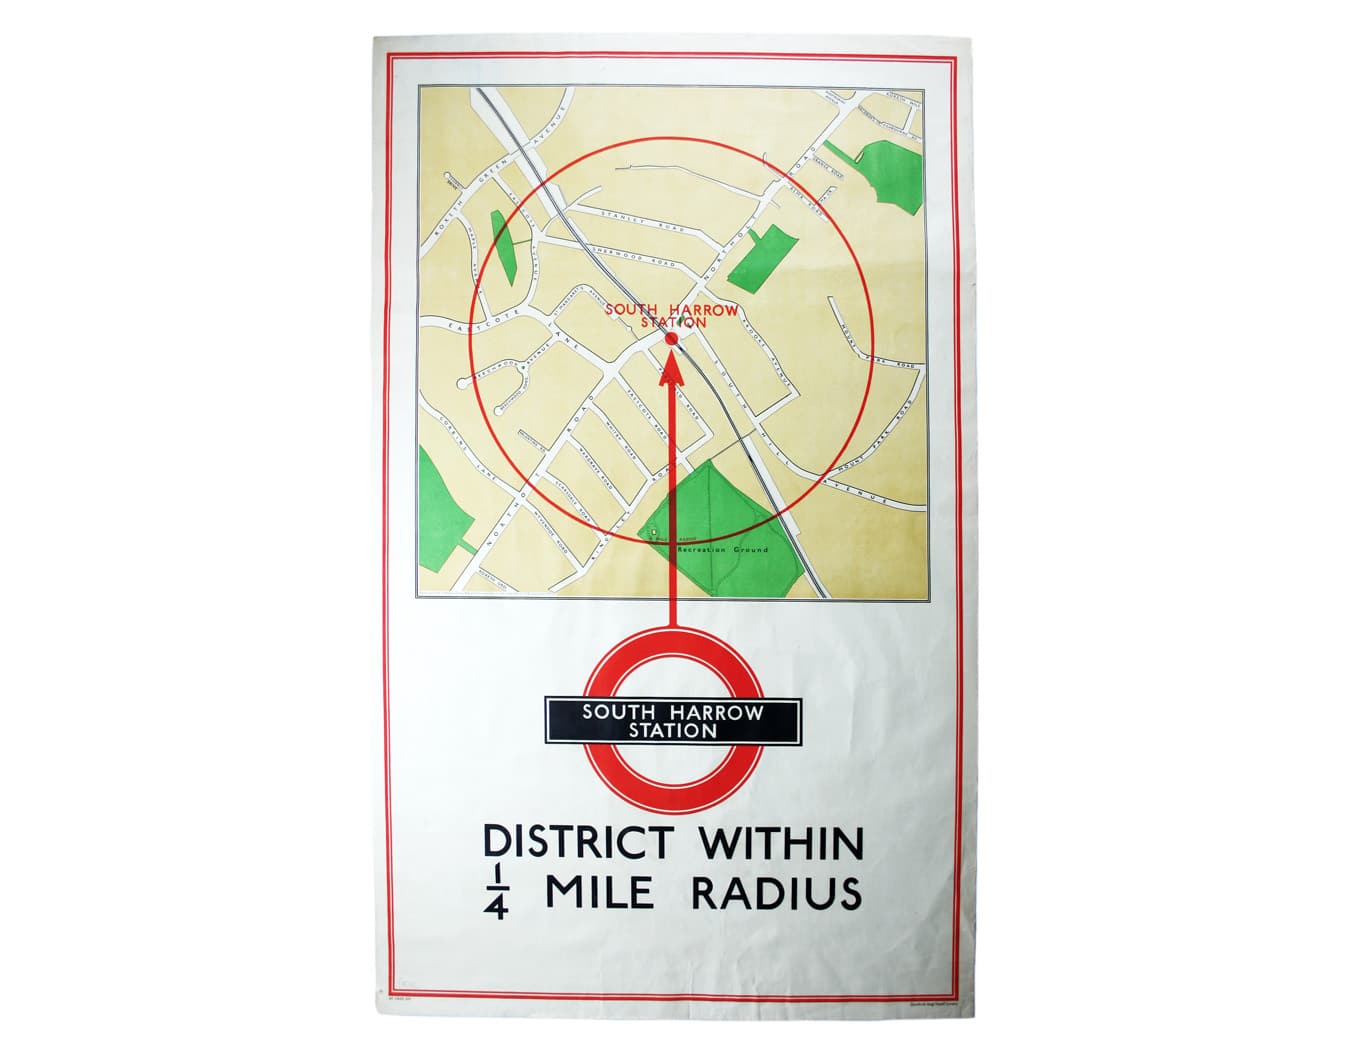 Quarter Mile Radius Map of South Harrow Station